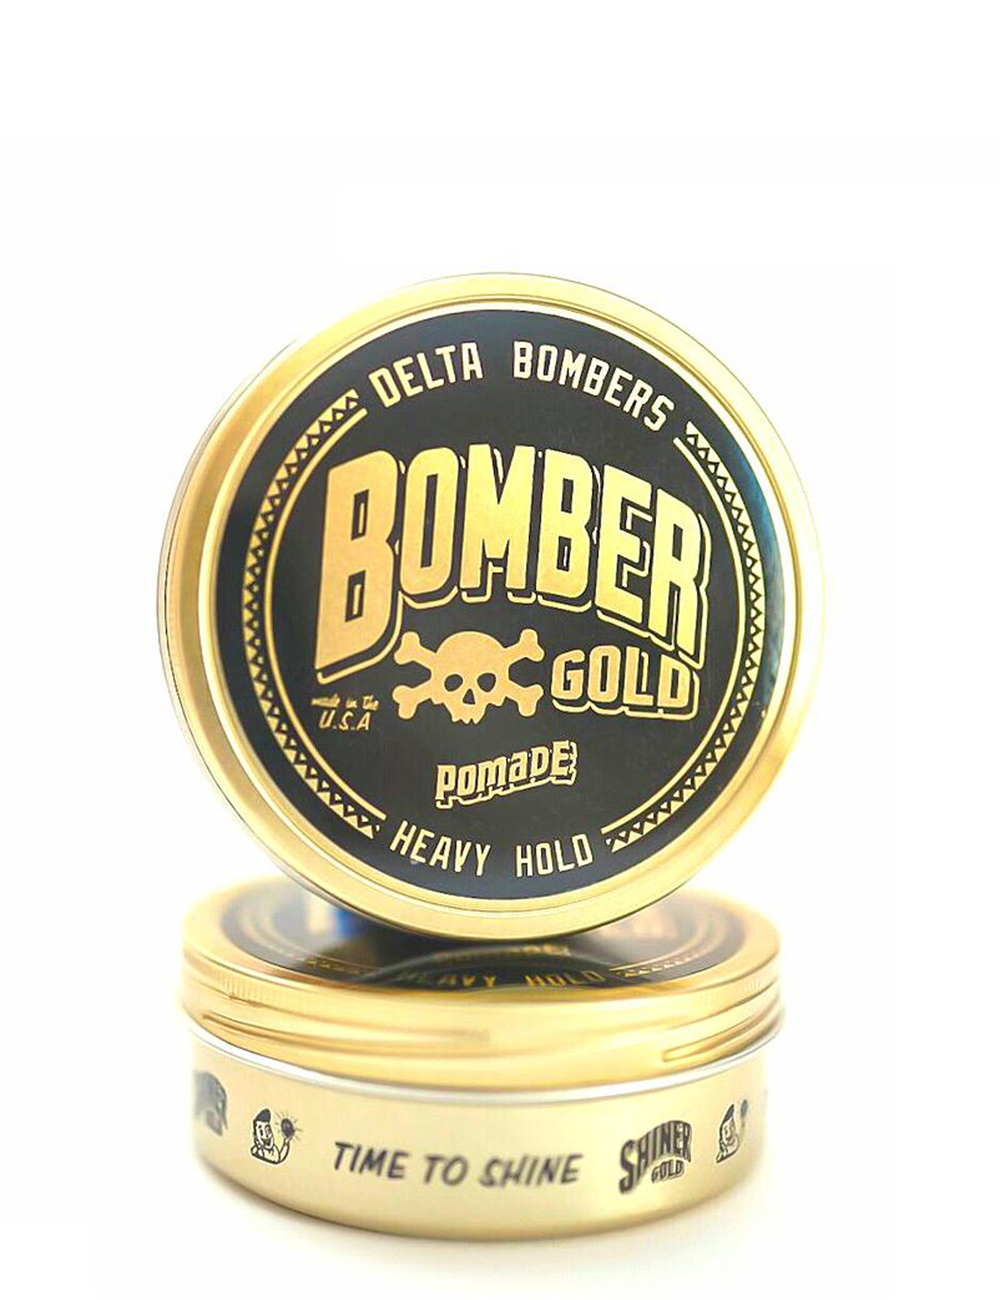 Shiner Gold Pomade Heavy Hold Delta Bombers Bourbon